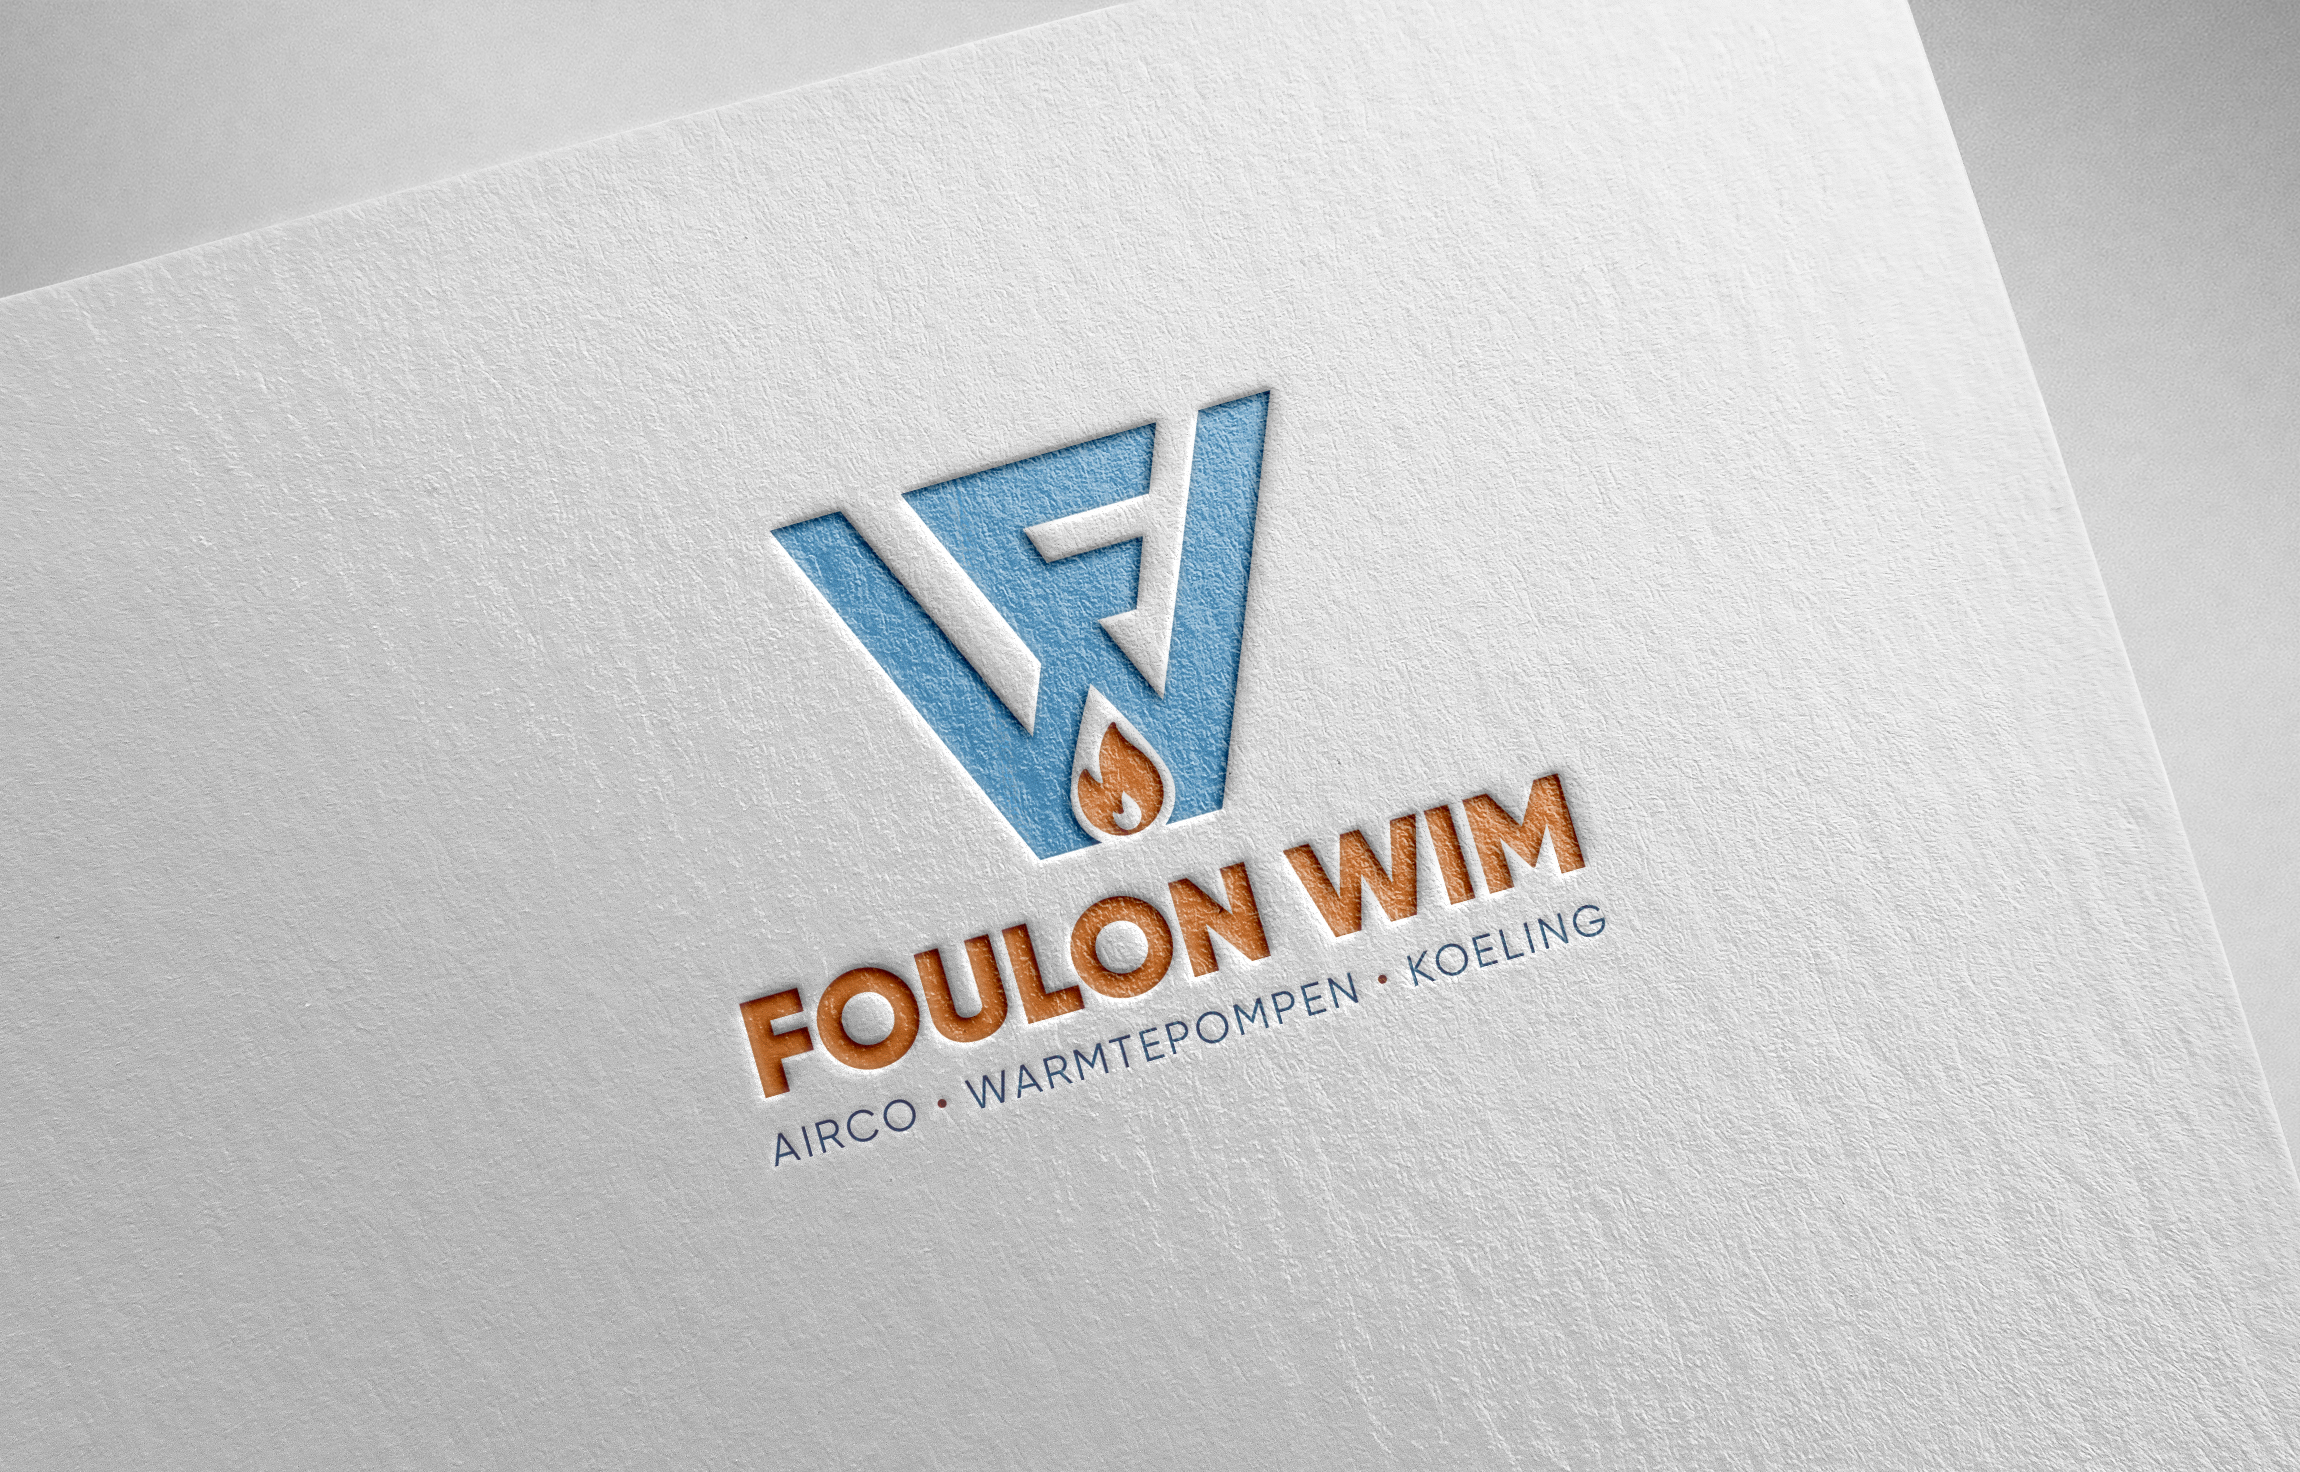 mc-design-wim-foulon-logo